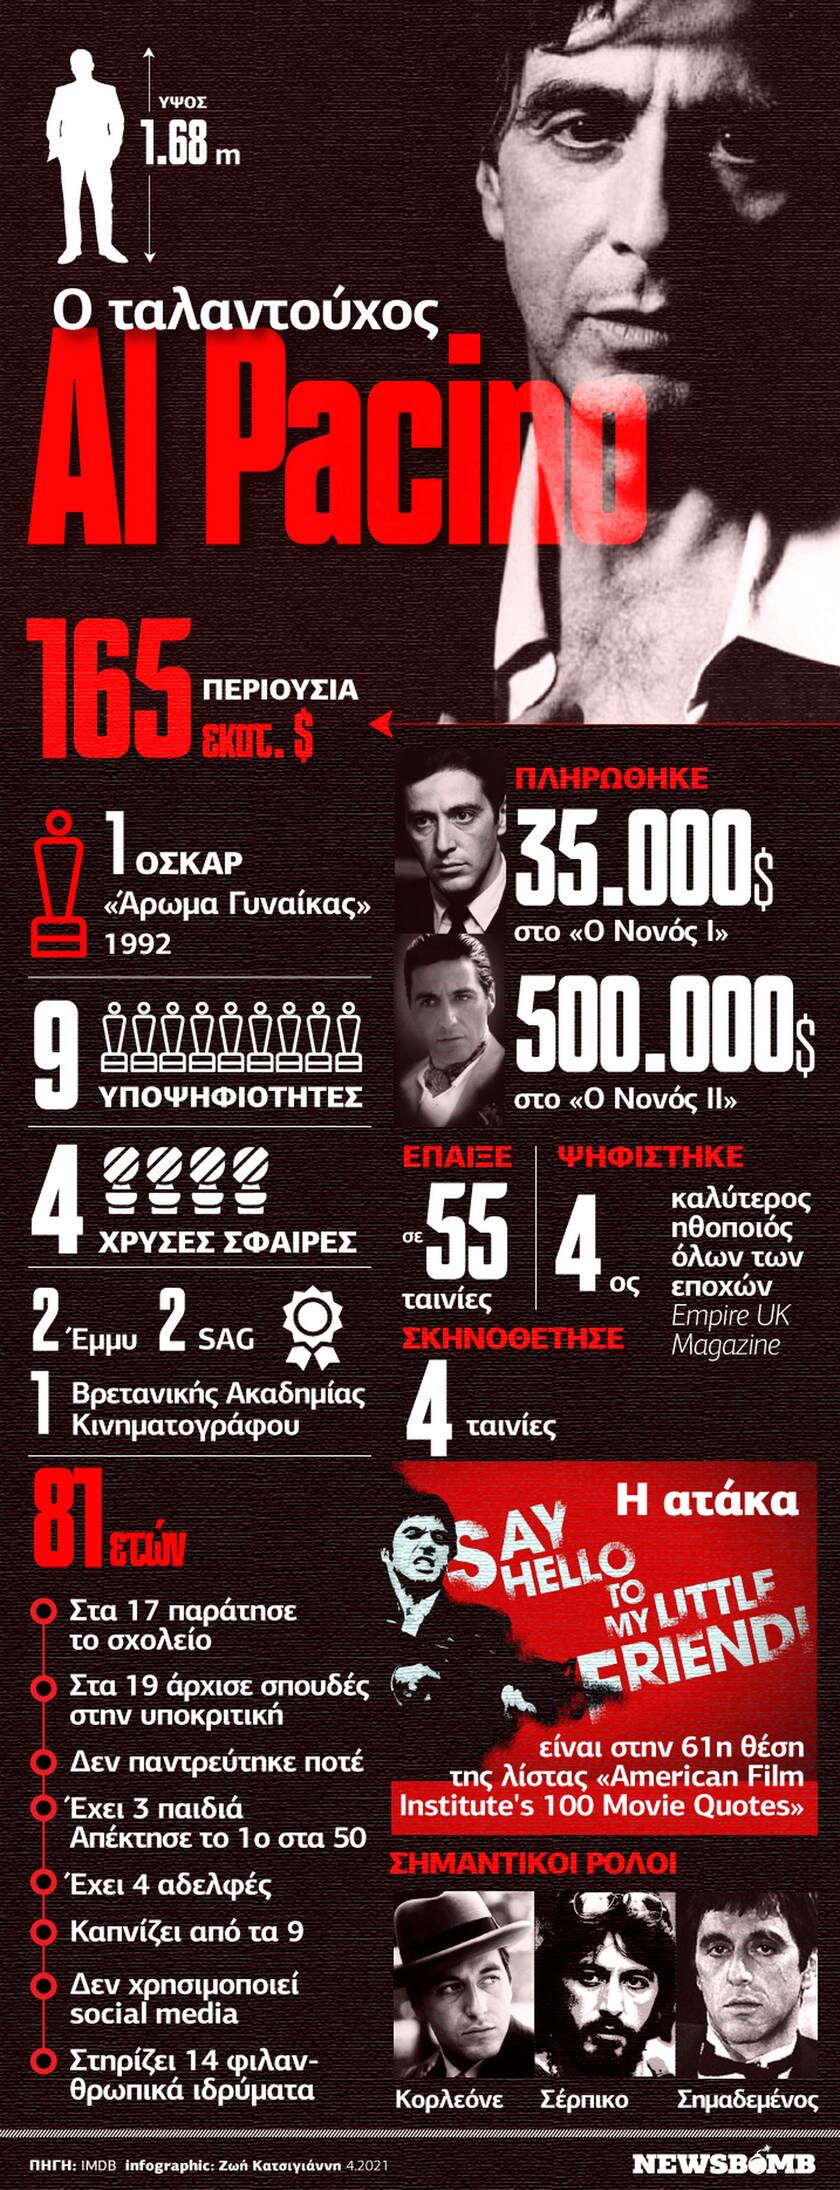 Al Pacino: Η εντυπωσιακή ζωή του αγαπημένου ηθοποιού - Δείτε το Infographic του Newsbomb.gr